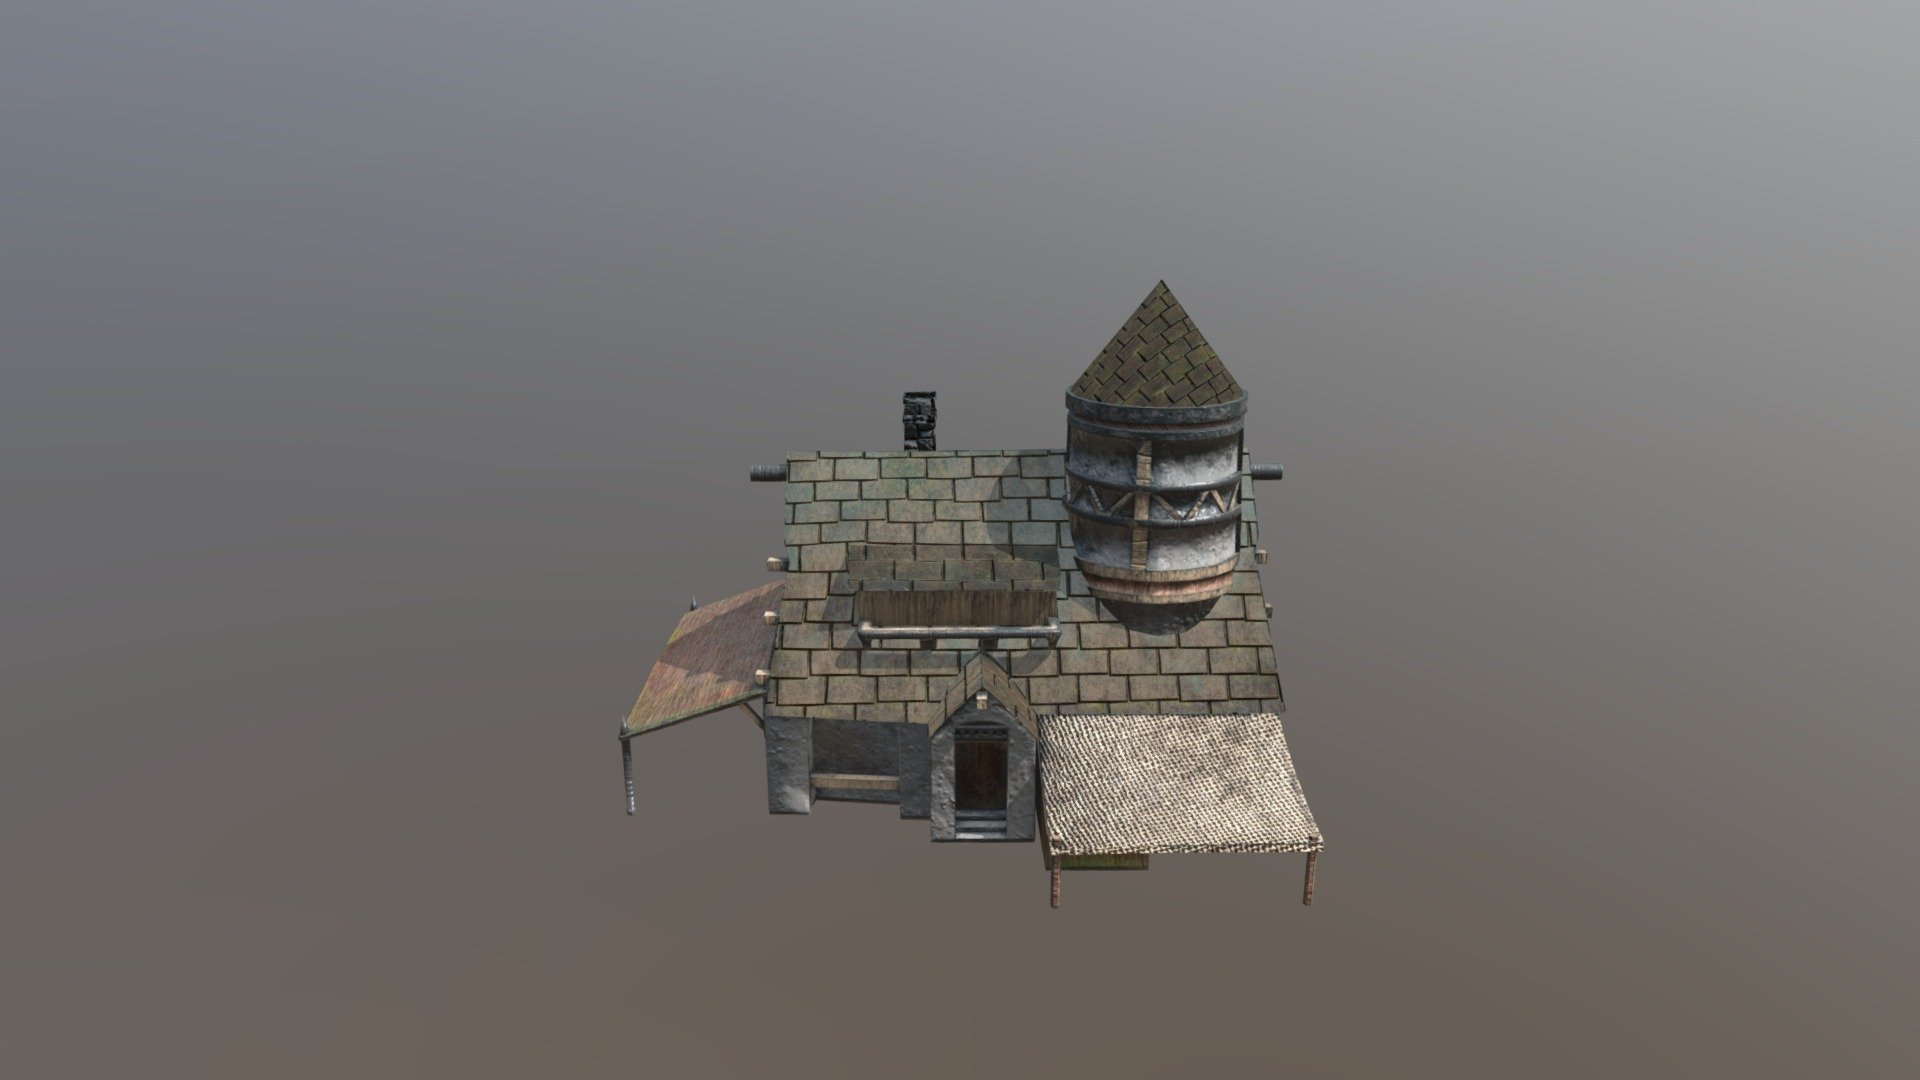 Medieval Inn